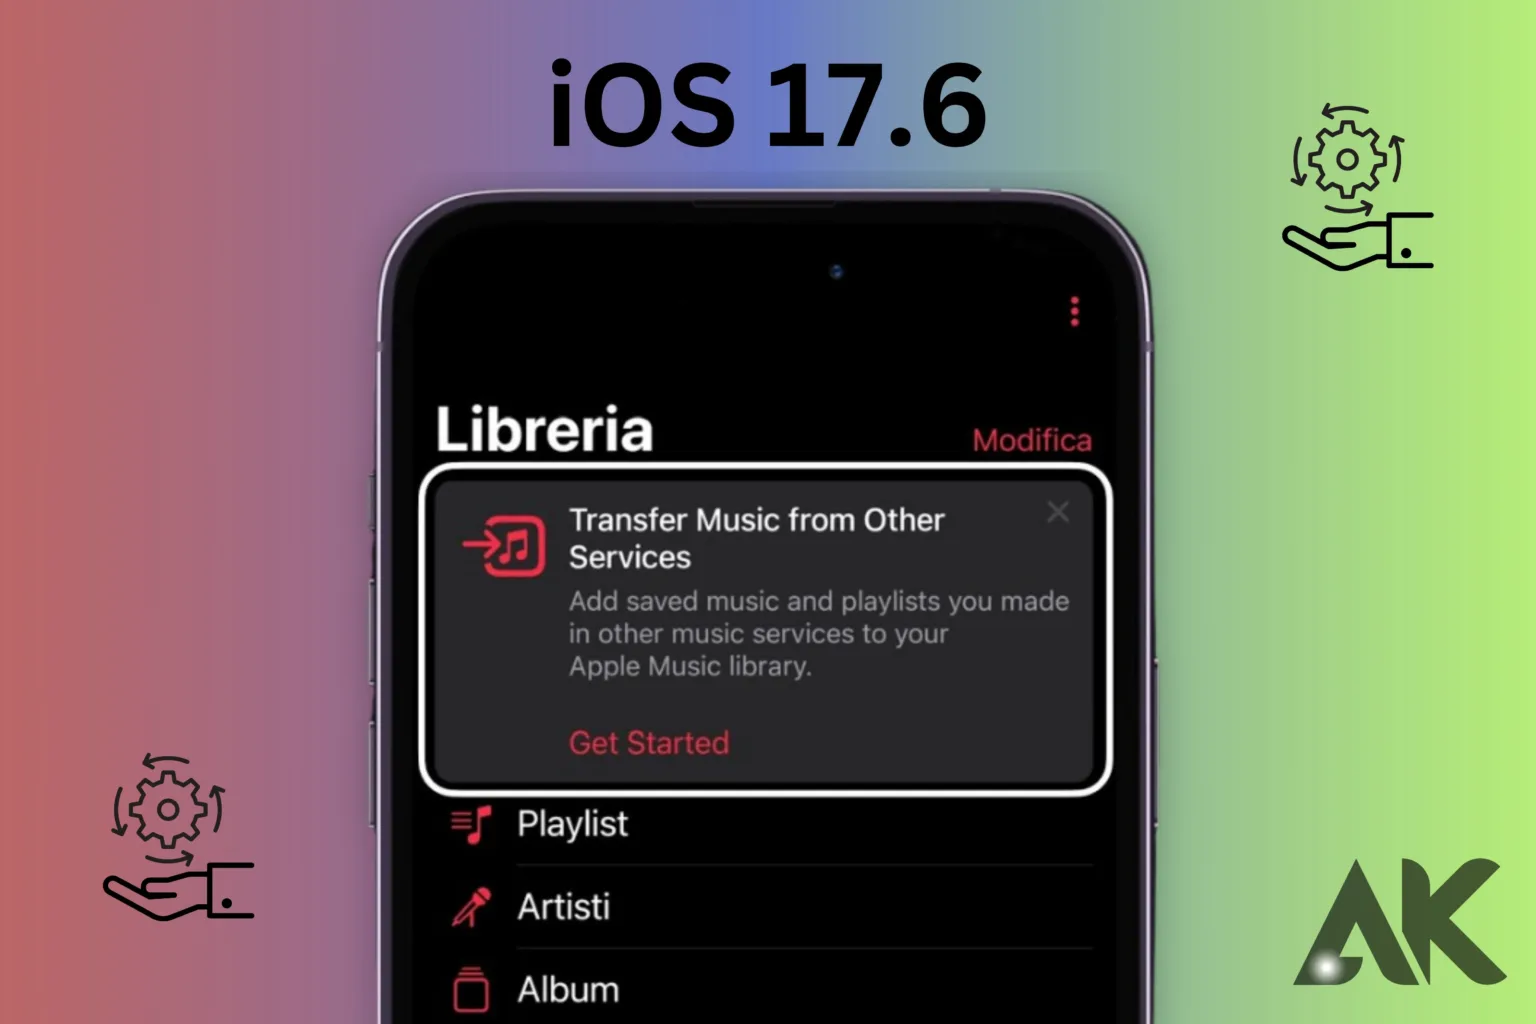 iOS 17.6 features